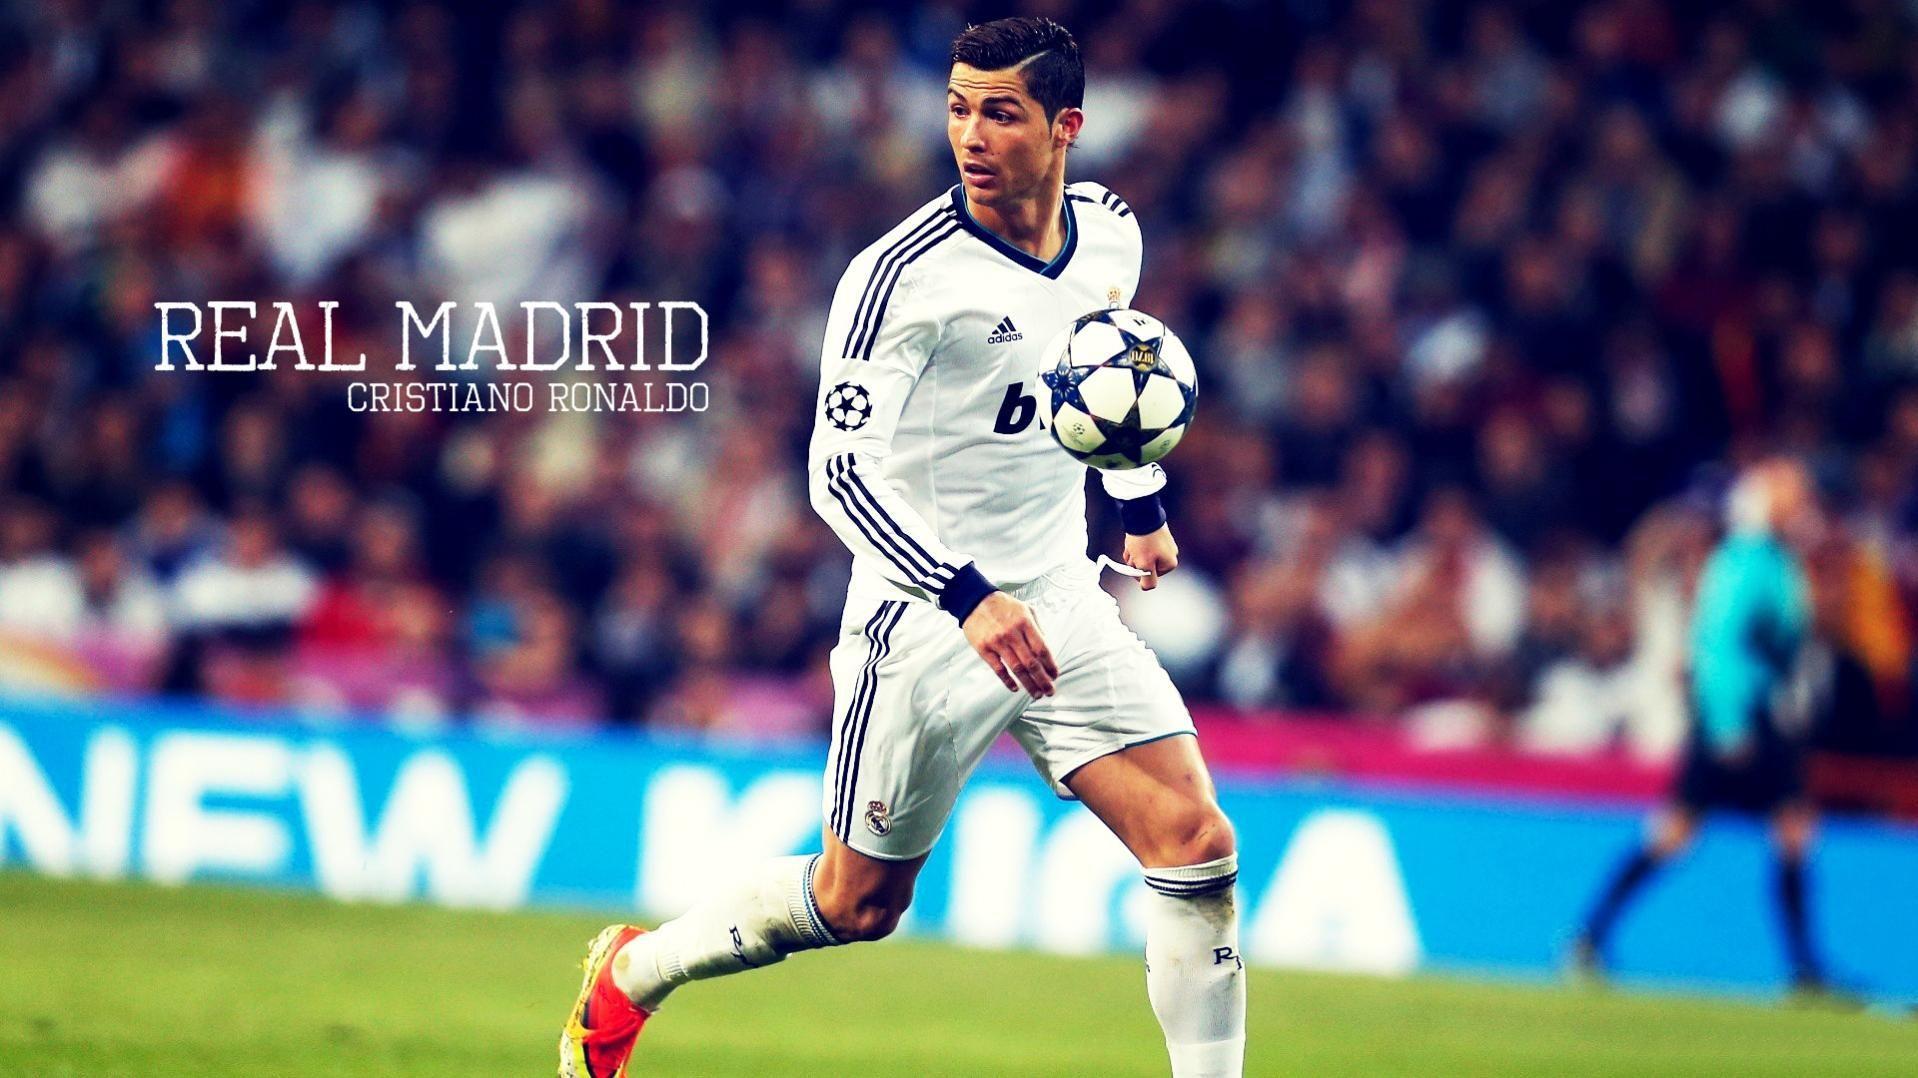 Cristiano Ronaldo HD Wallpaper and Picture download for free